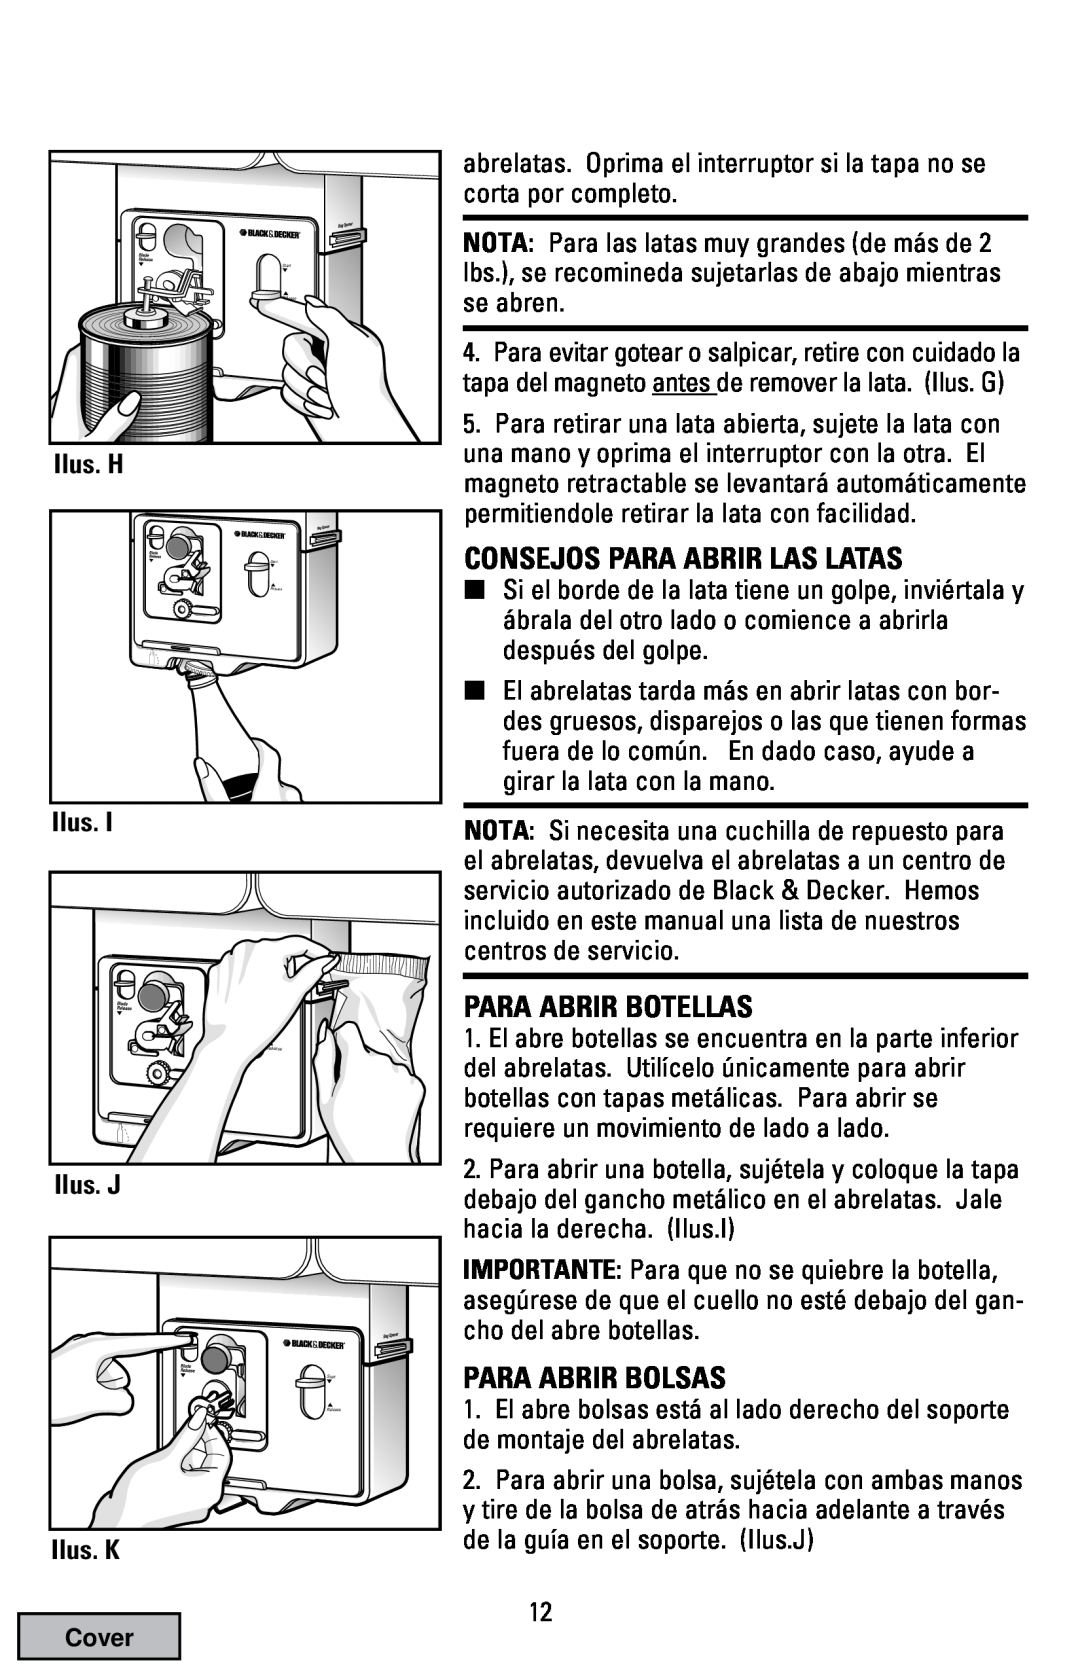 Black & Decker EC70 manual Consejos Para Abrir Las Latas, Para Abrir Botellas, Para Abrir Bolsas, Ilus. H, Ilus. J, Ilus. K 